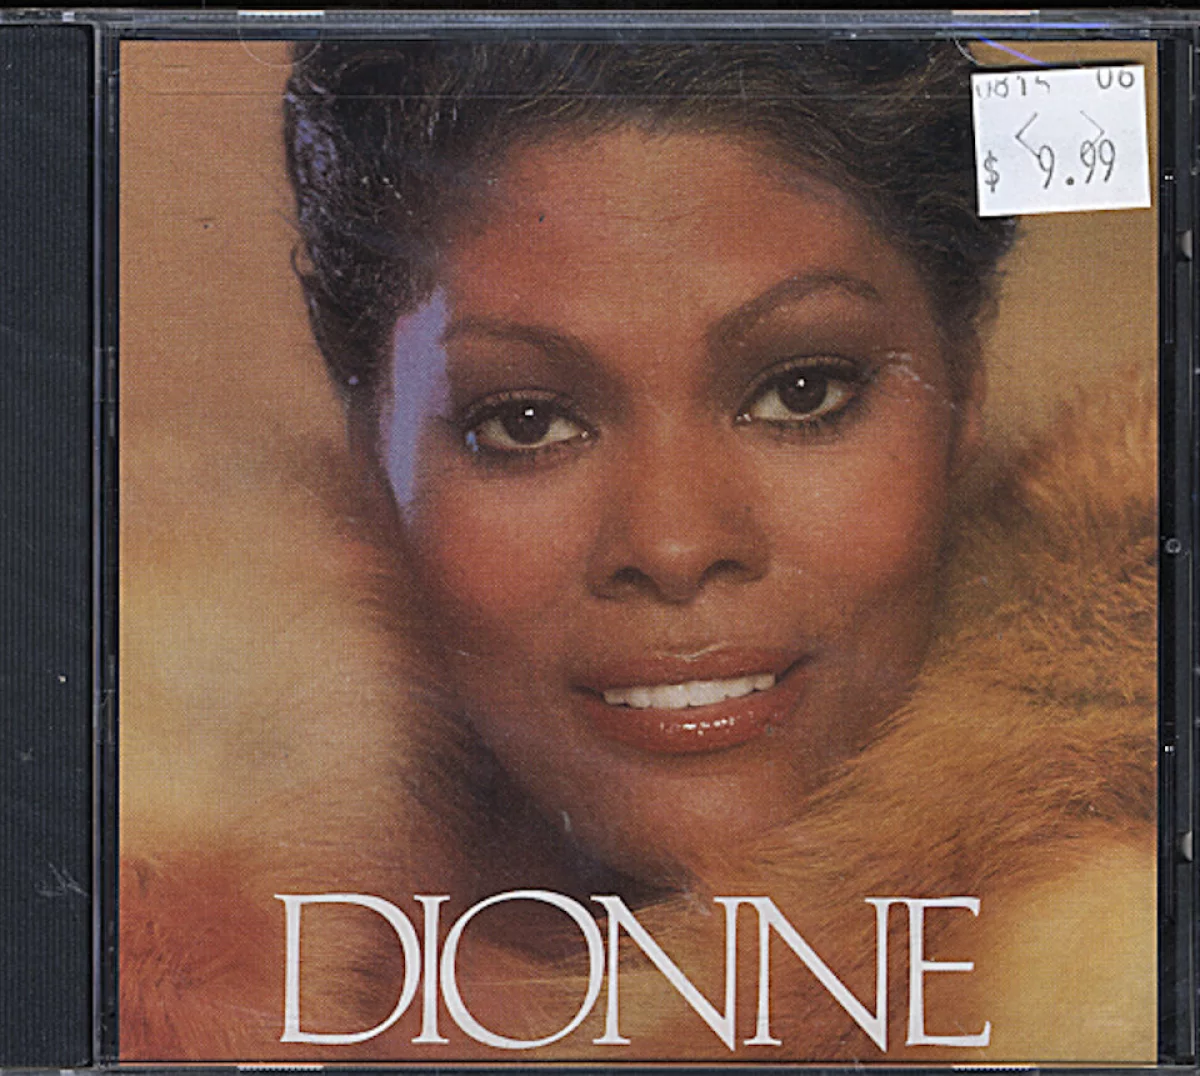 Dionne Warwick CD, 1979 at Wolfgang's